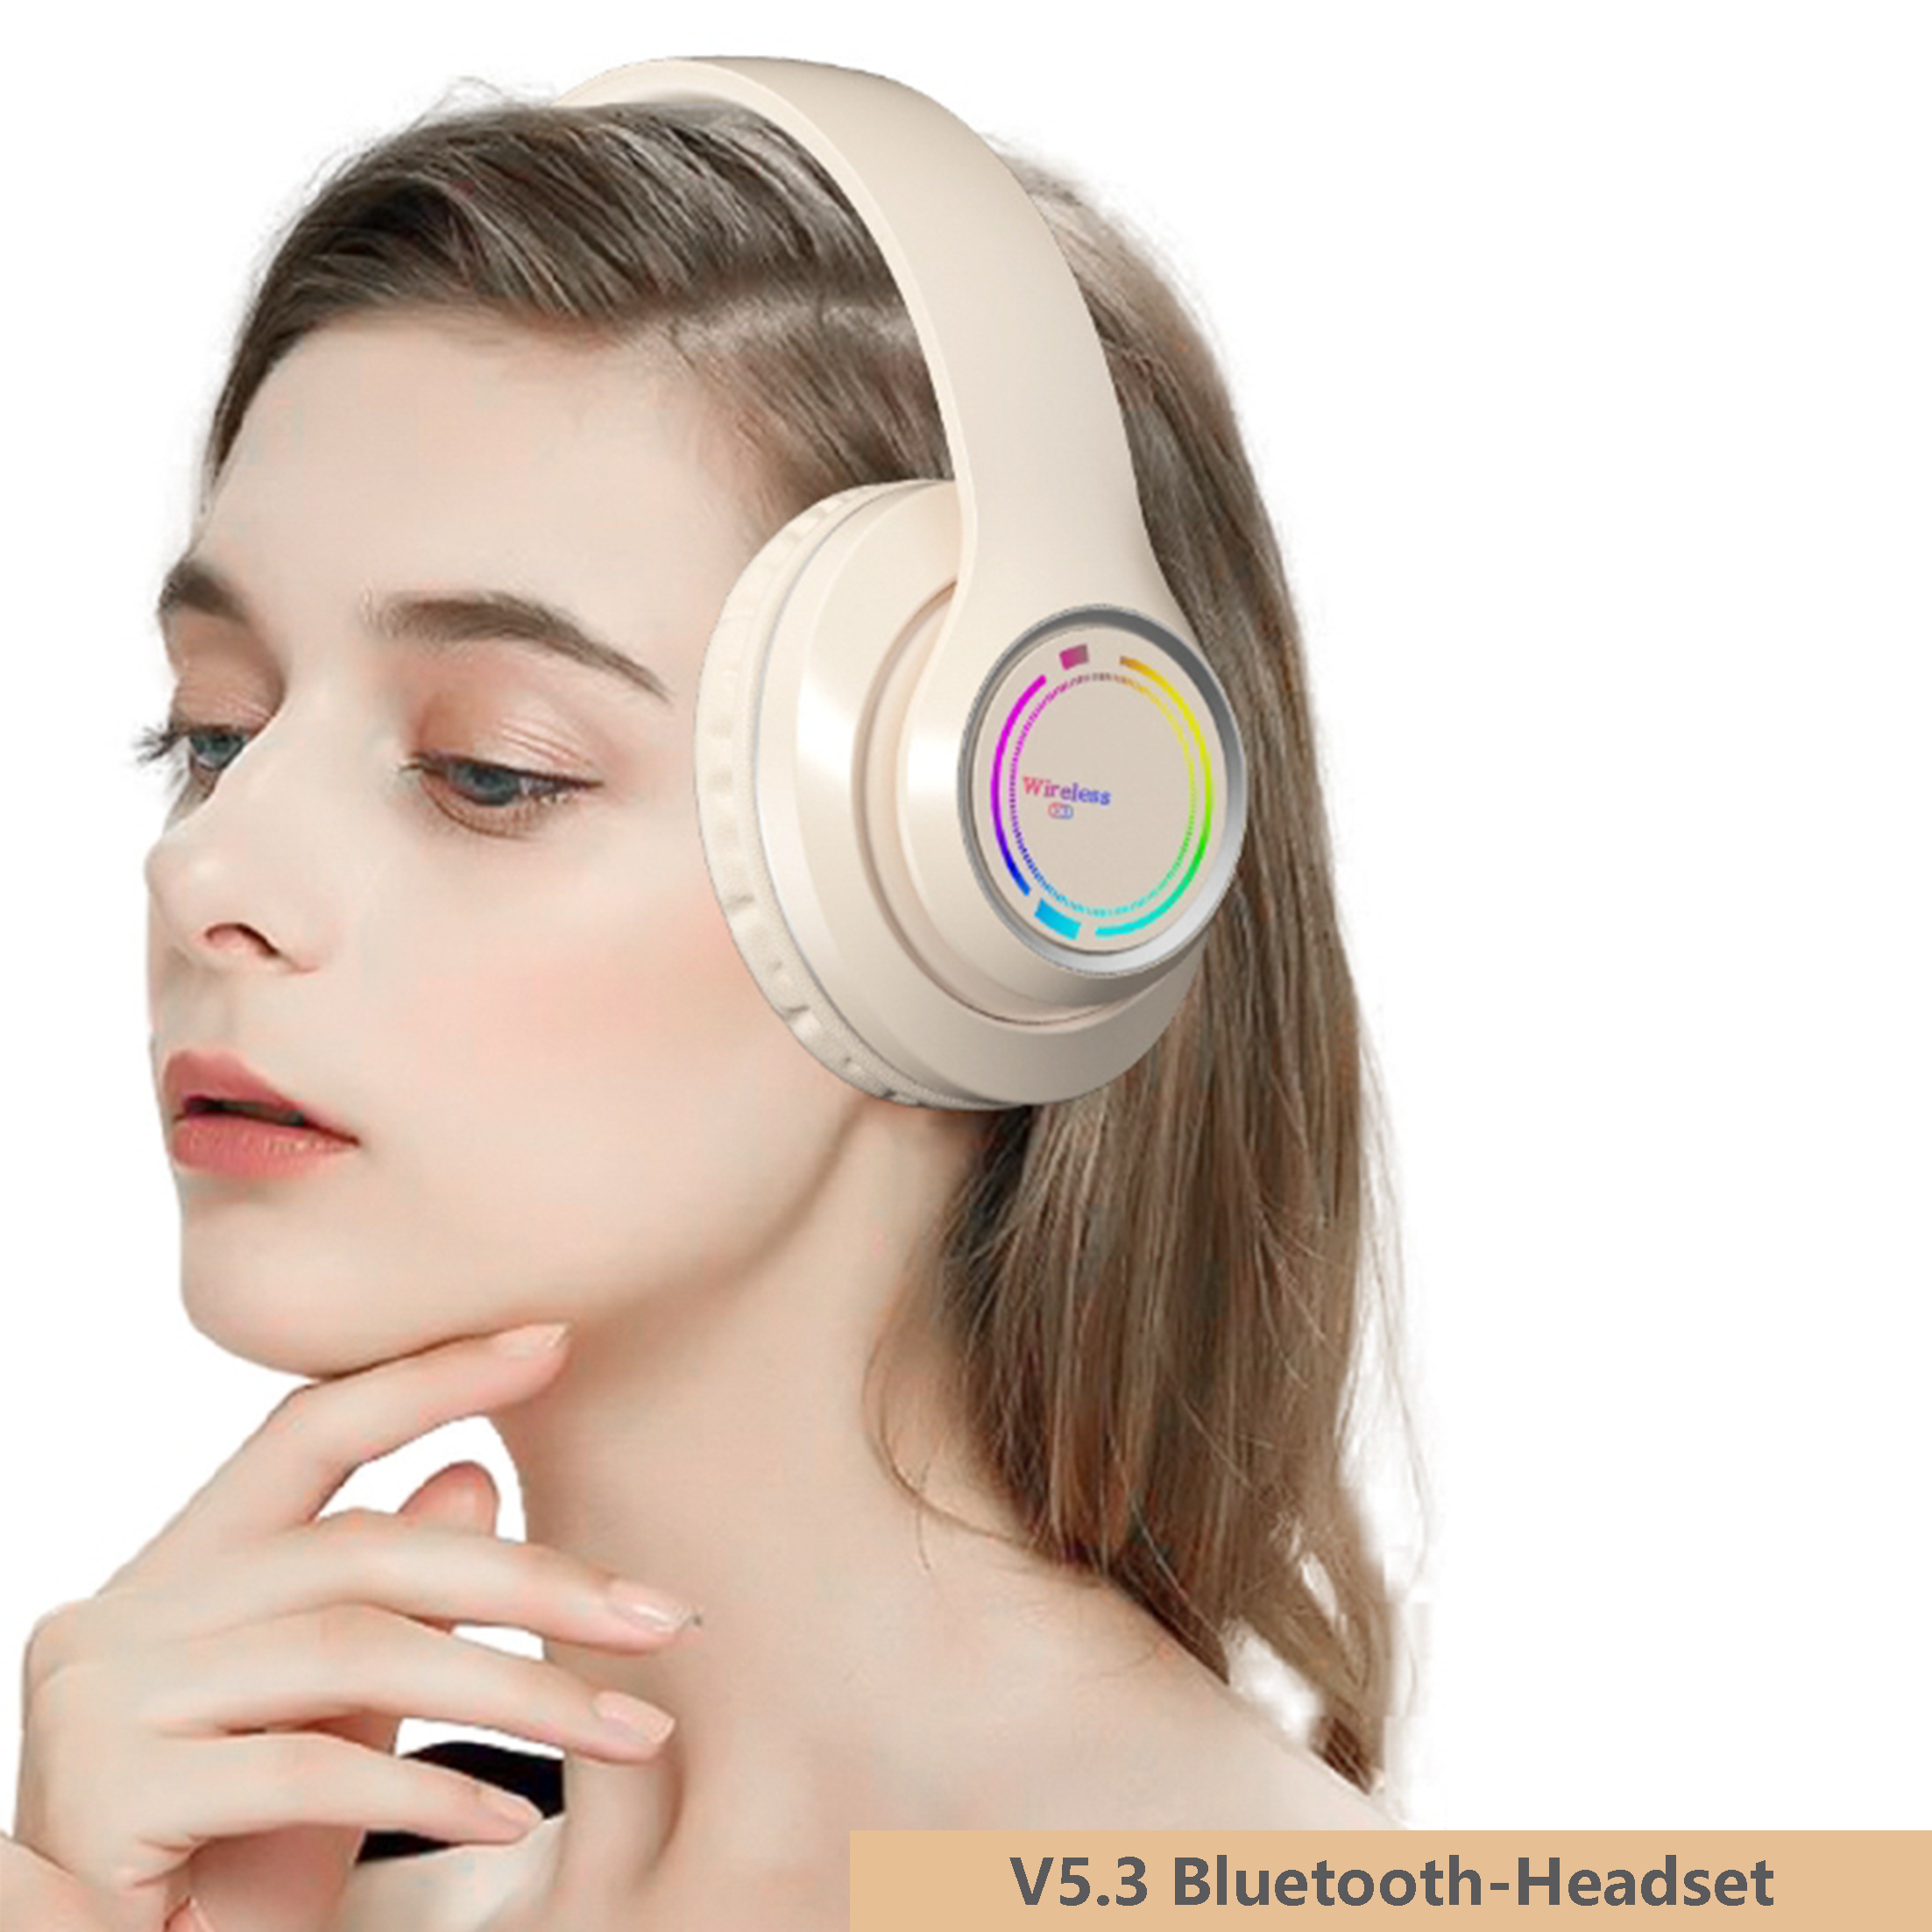 KINSI V3 Drahtlos,Spiele,RGB, Bluetooth-Kopfhörer Bluetooth Over-ear Creme